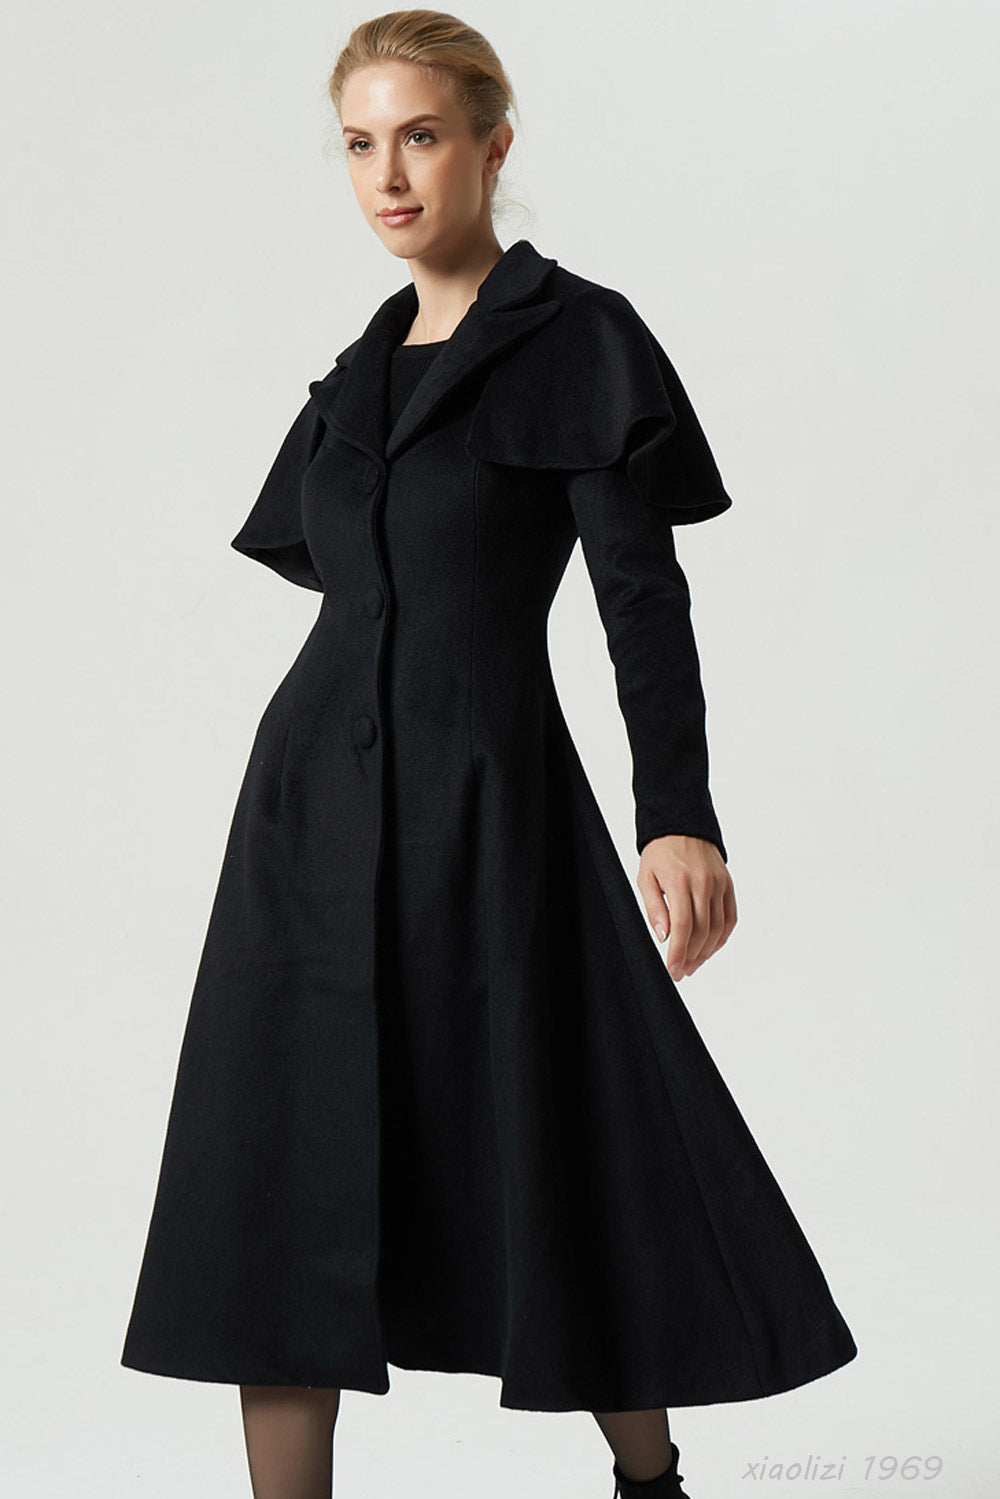 Maxi Black Wool Coat With Capelet For Women 1969# – XiaoLizi